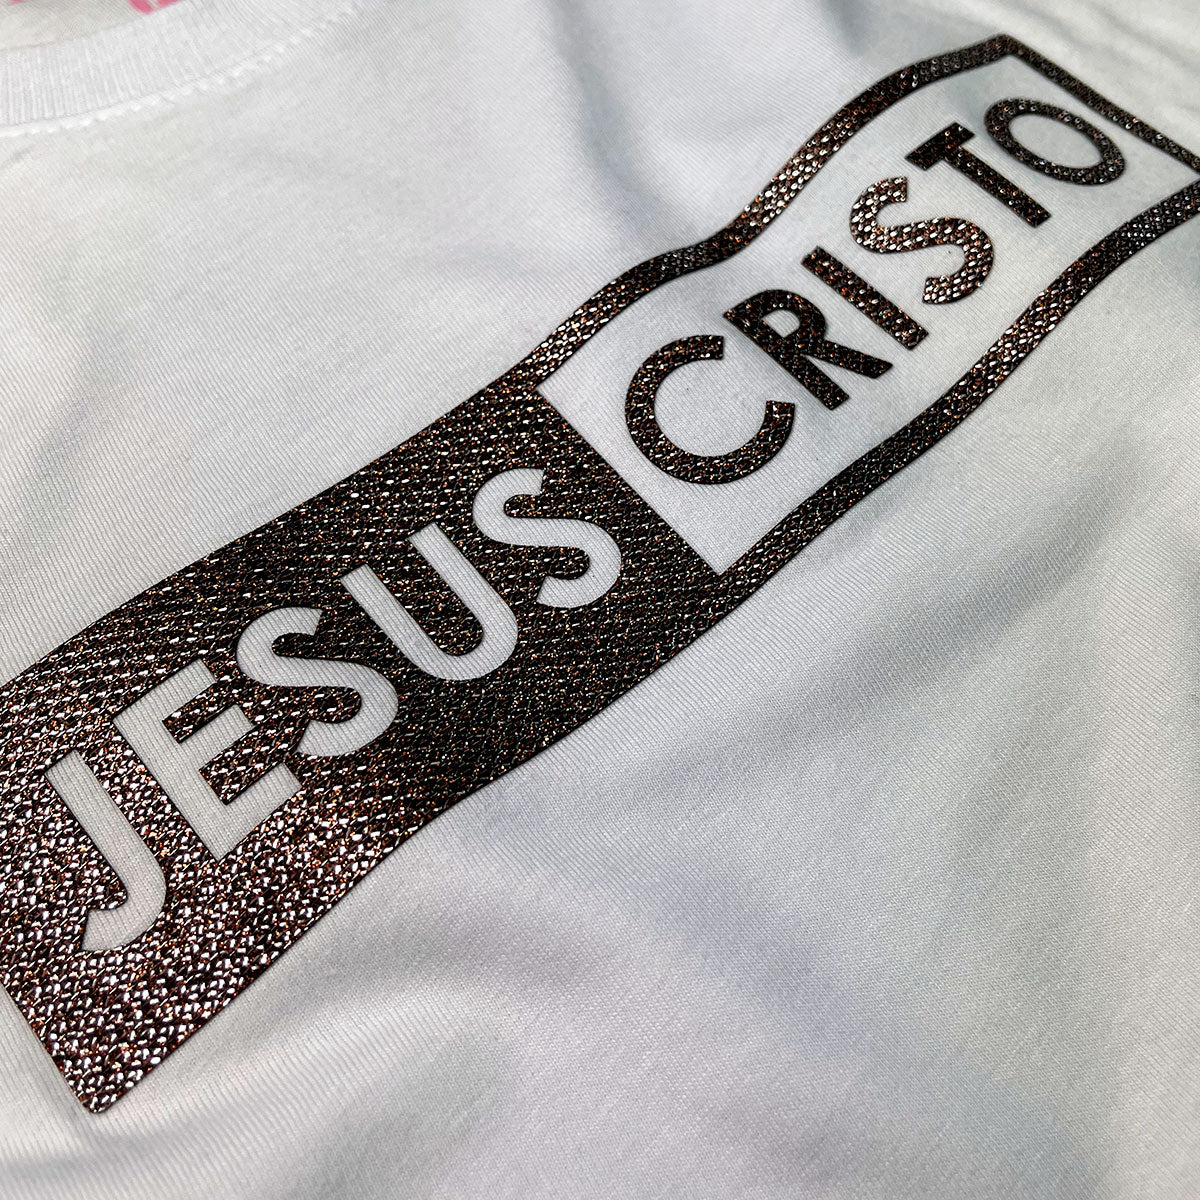 Camiseta Feminina Branca Jesus Cristo Glitter